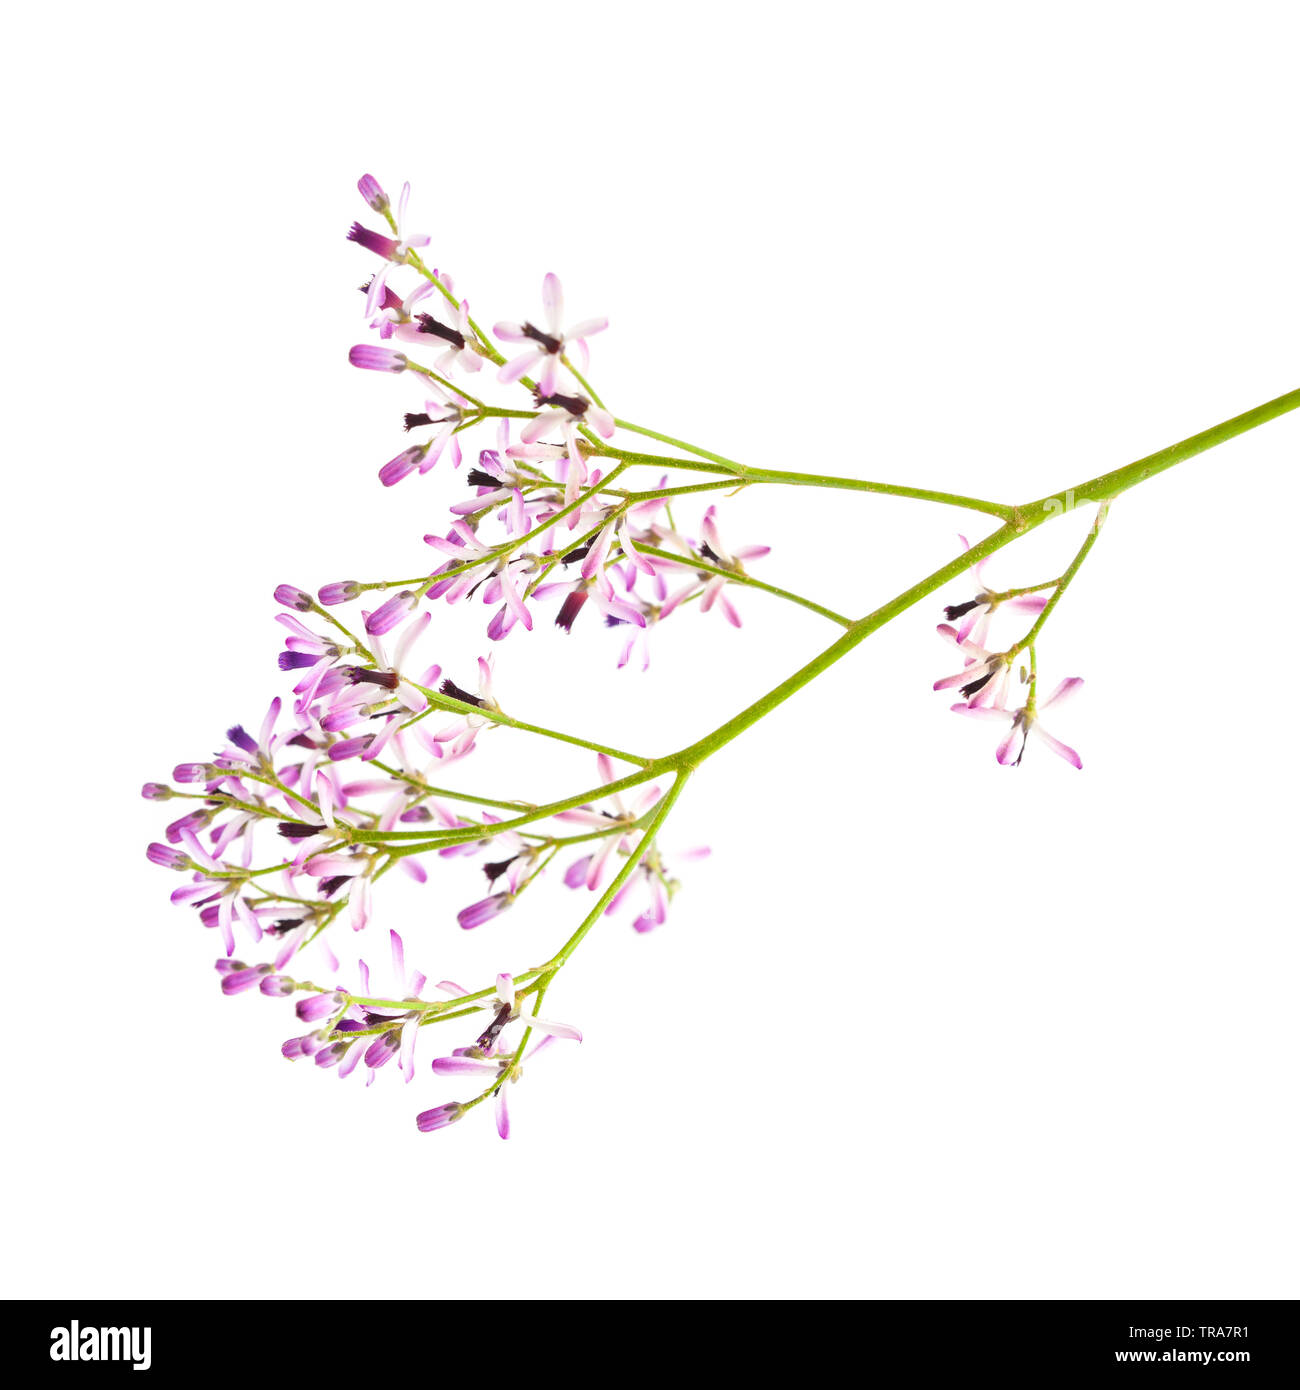 Melia azedarach, AKA chinaberry tree twig with flowers isolated on white Stock Photo